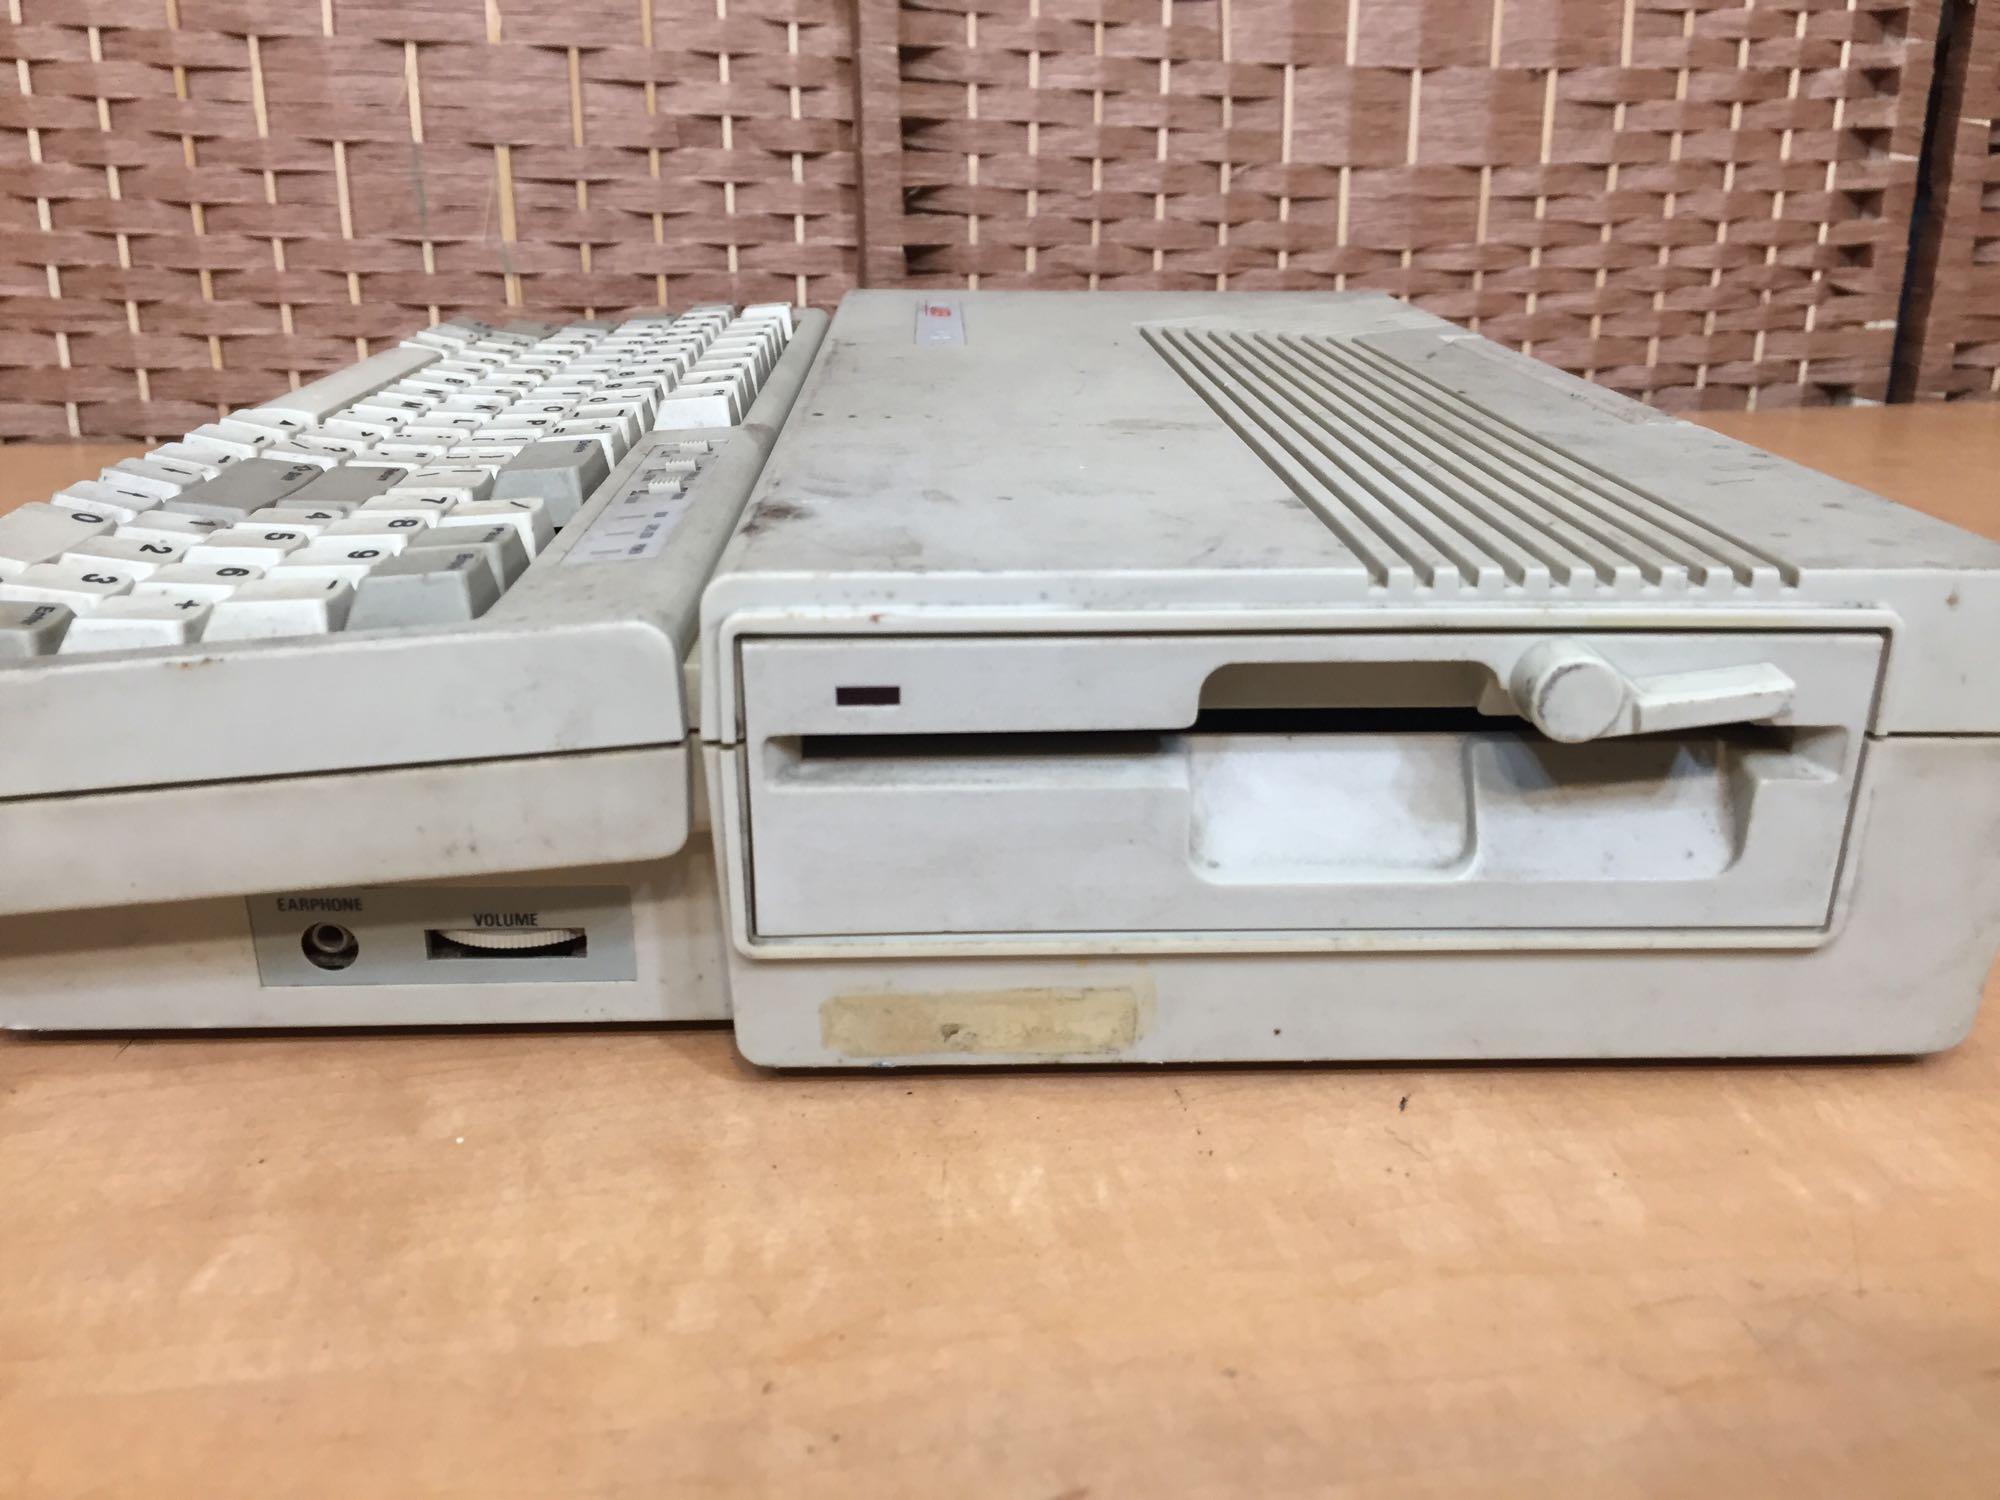 Apple II Clone / Laser 128 Personal Computer